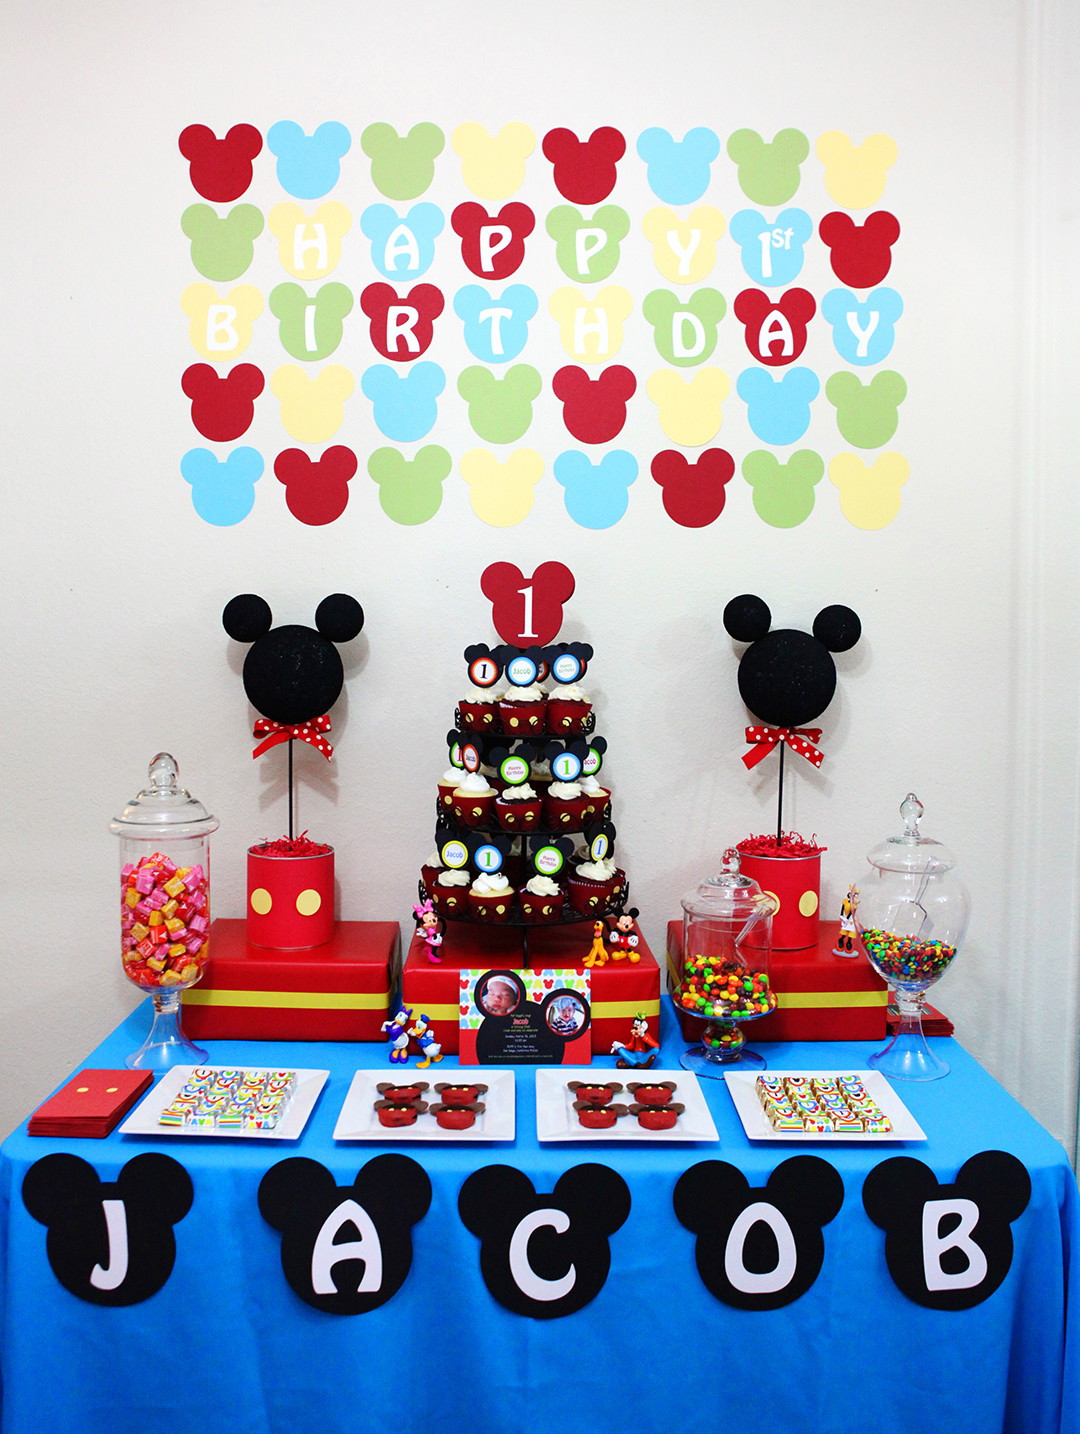 Mickey Mouse Birthday Decorations
 Invitation Parlour Mickey Mouse Birthday Party